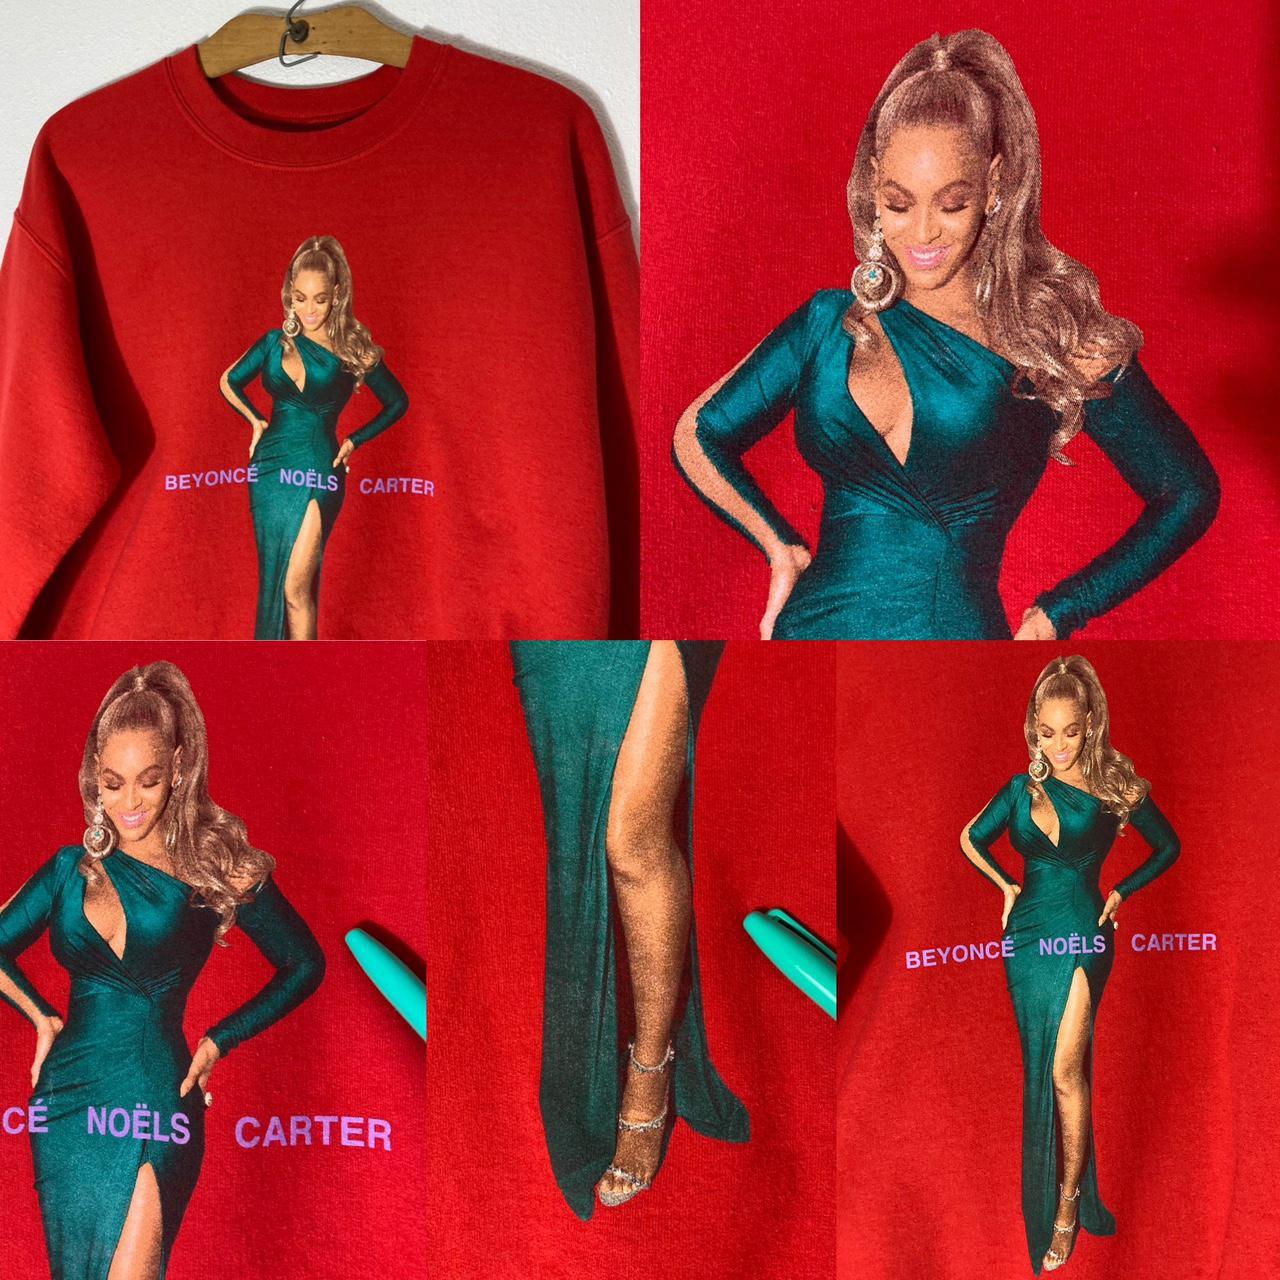 Product Image 2 - Red Beyoncé NOELS Carter sweatshirt

Perfect